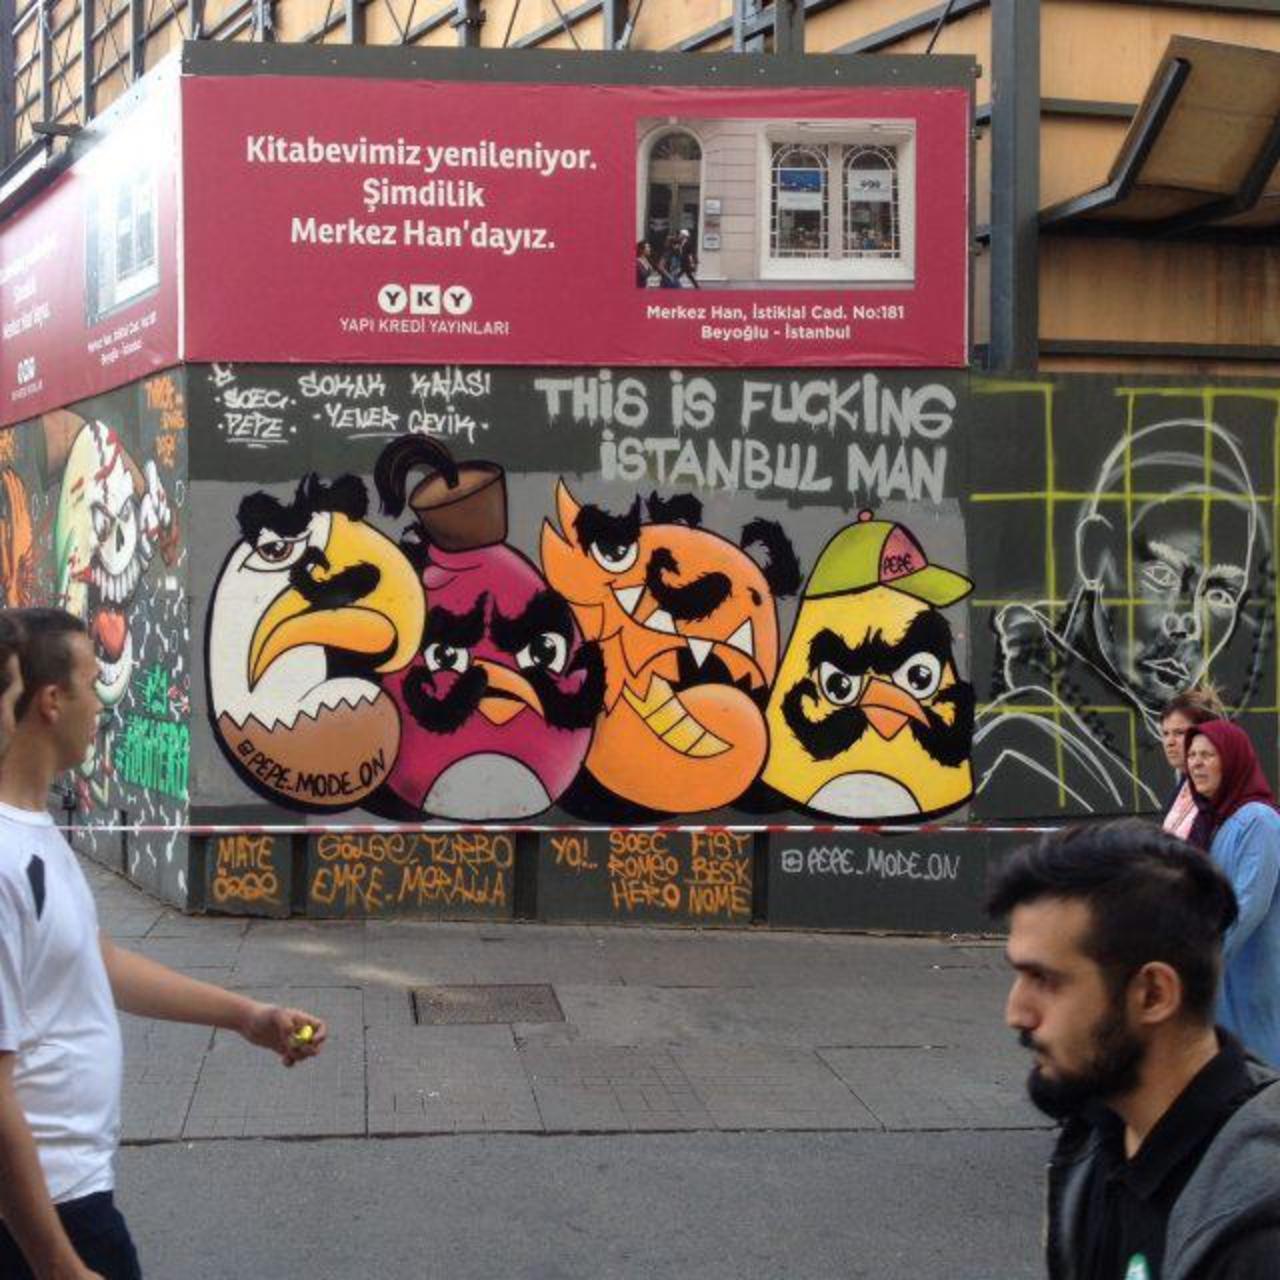 angry birds style :) pepe mode on! #graffiti #graffitiart #istiklalcaddesi #street #streetart #angrybirds #streetar… http://t.co/aXvlzIVLfz